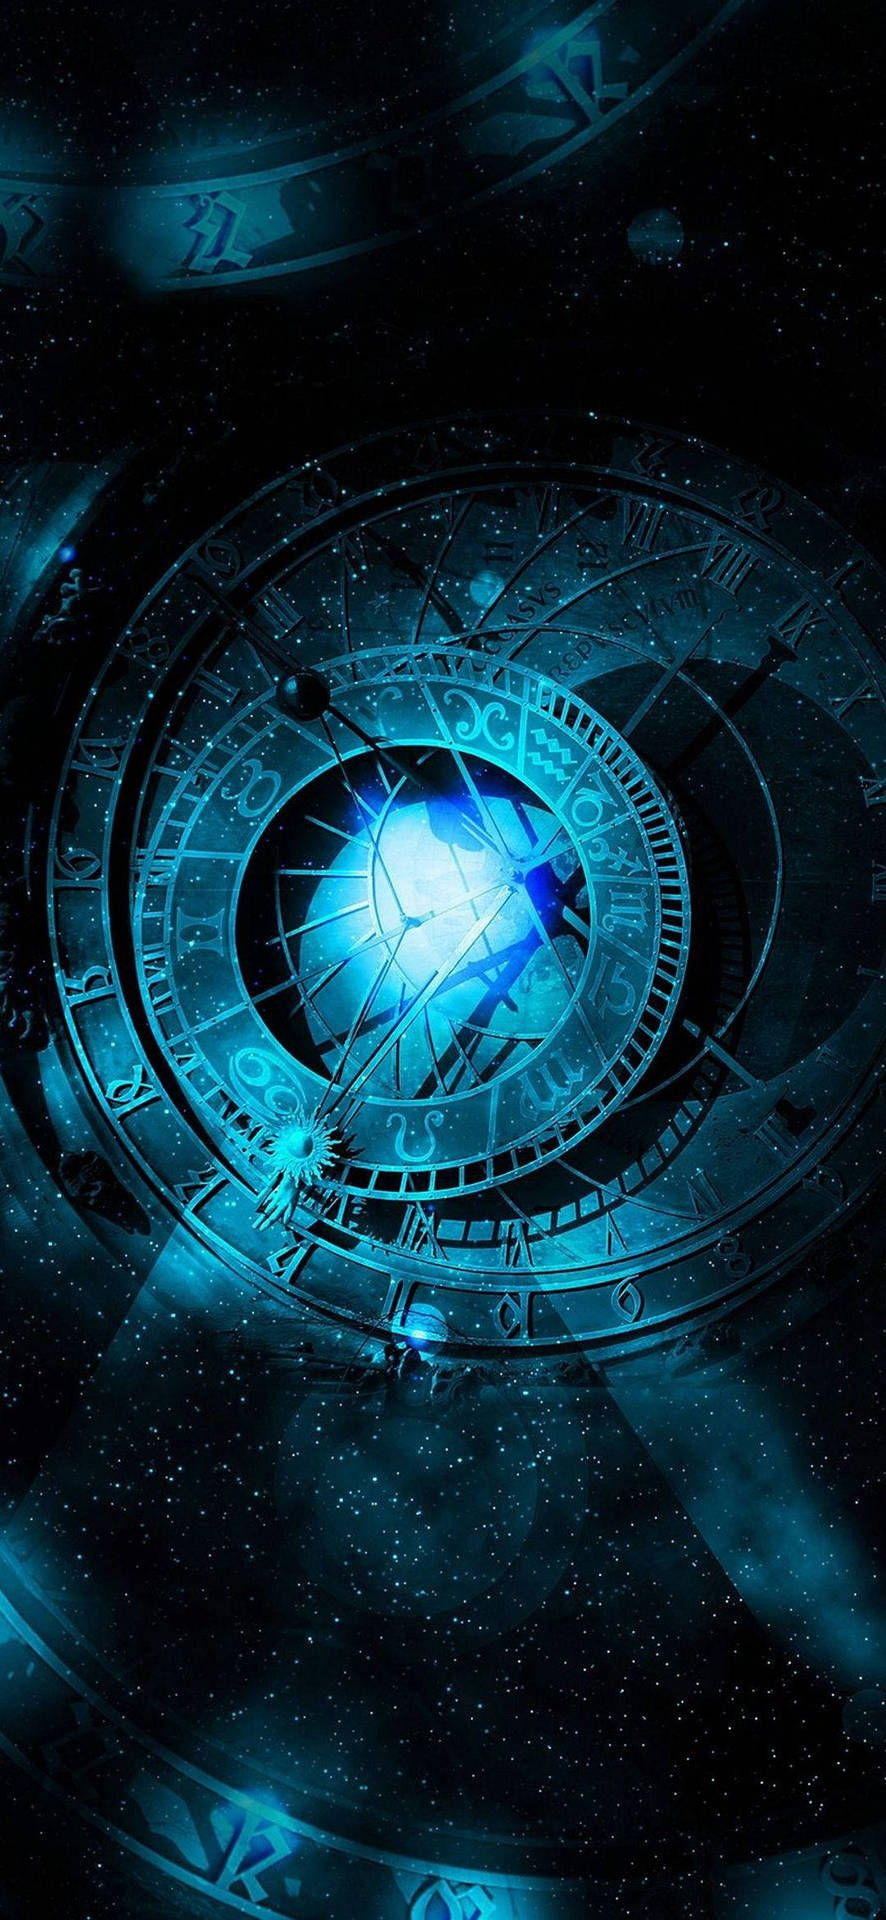 Download Mystical Astrological Compass Wallpaper 